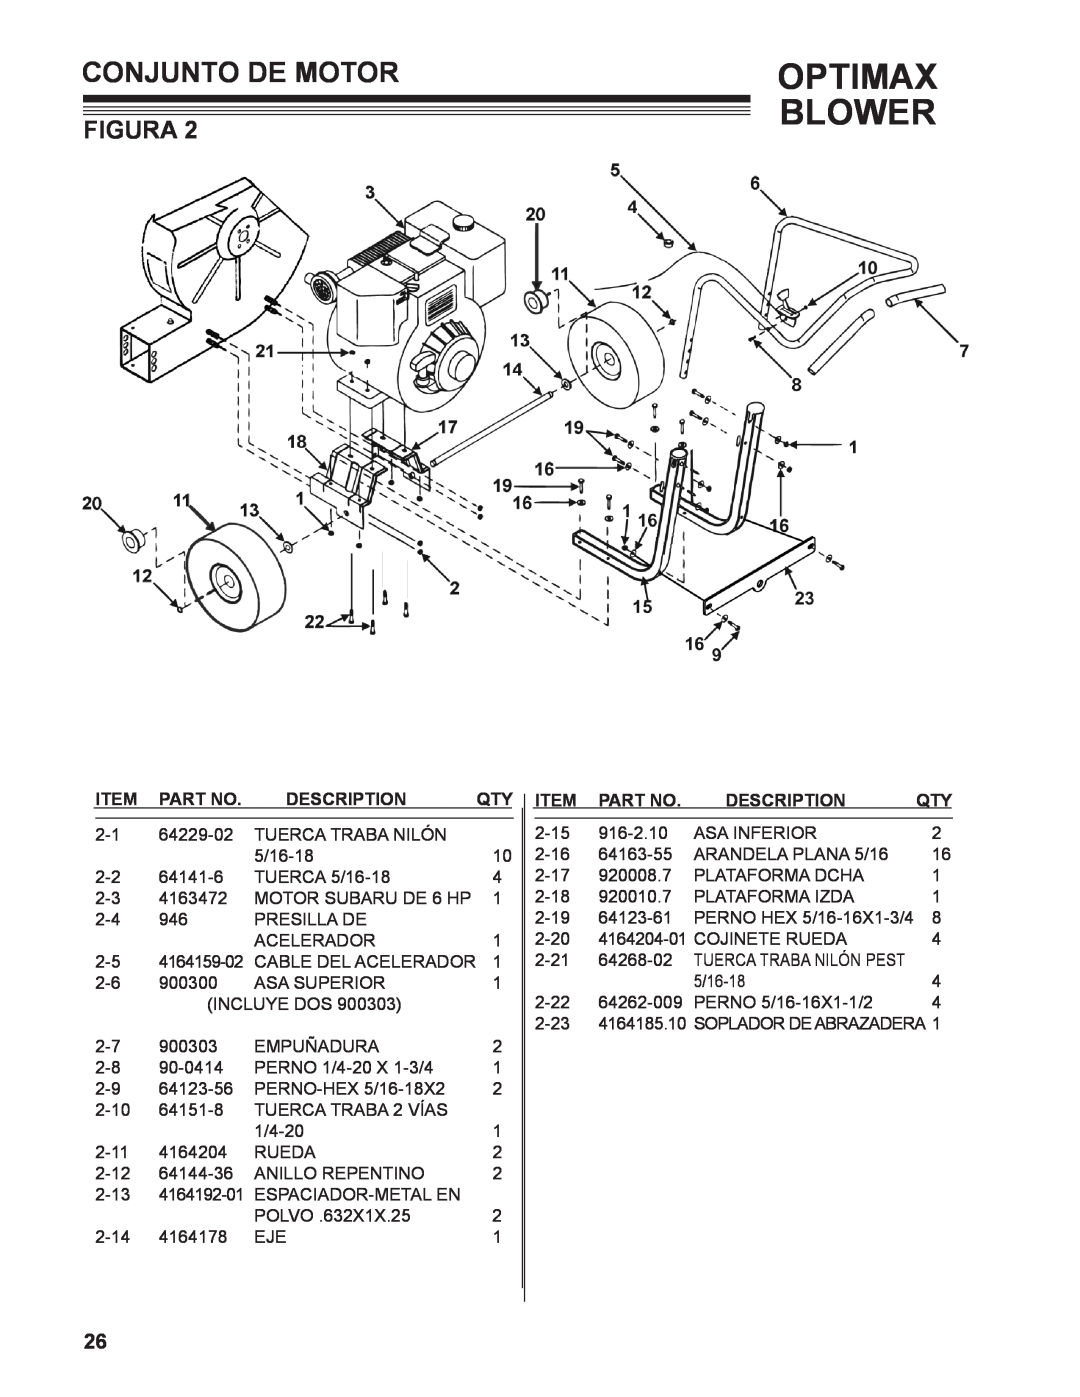 Little Wonder LB601-00-01 technical manual Conjunto De Motor, Optimax Blower, Figura, Description 